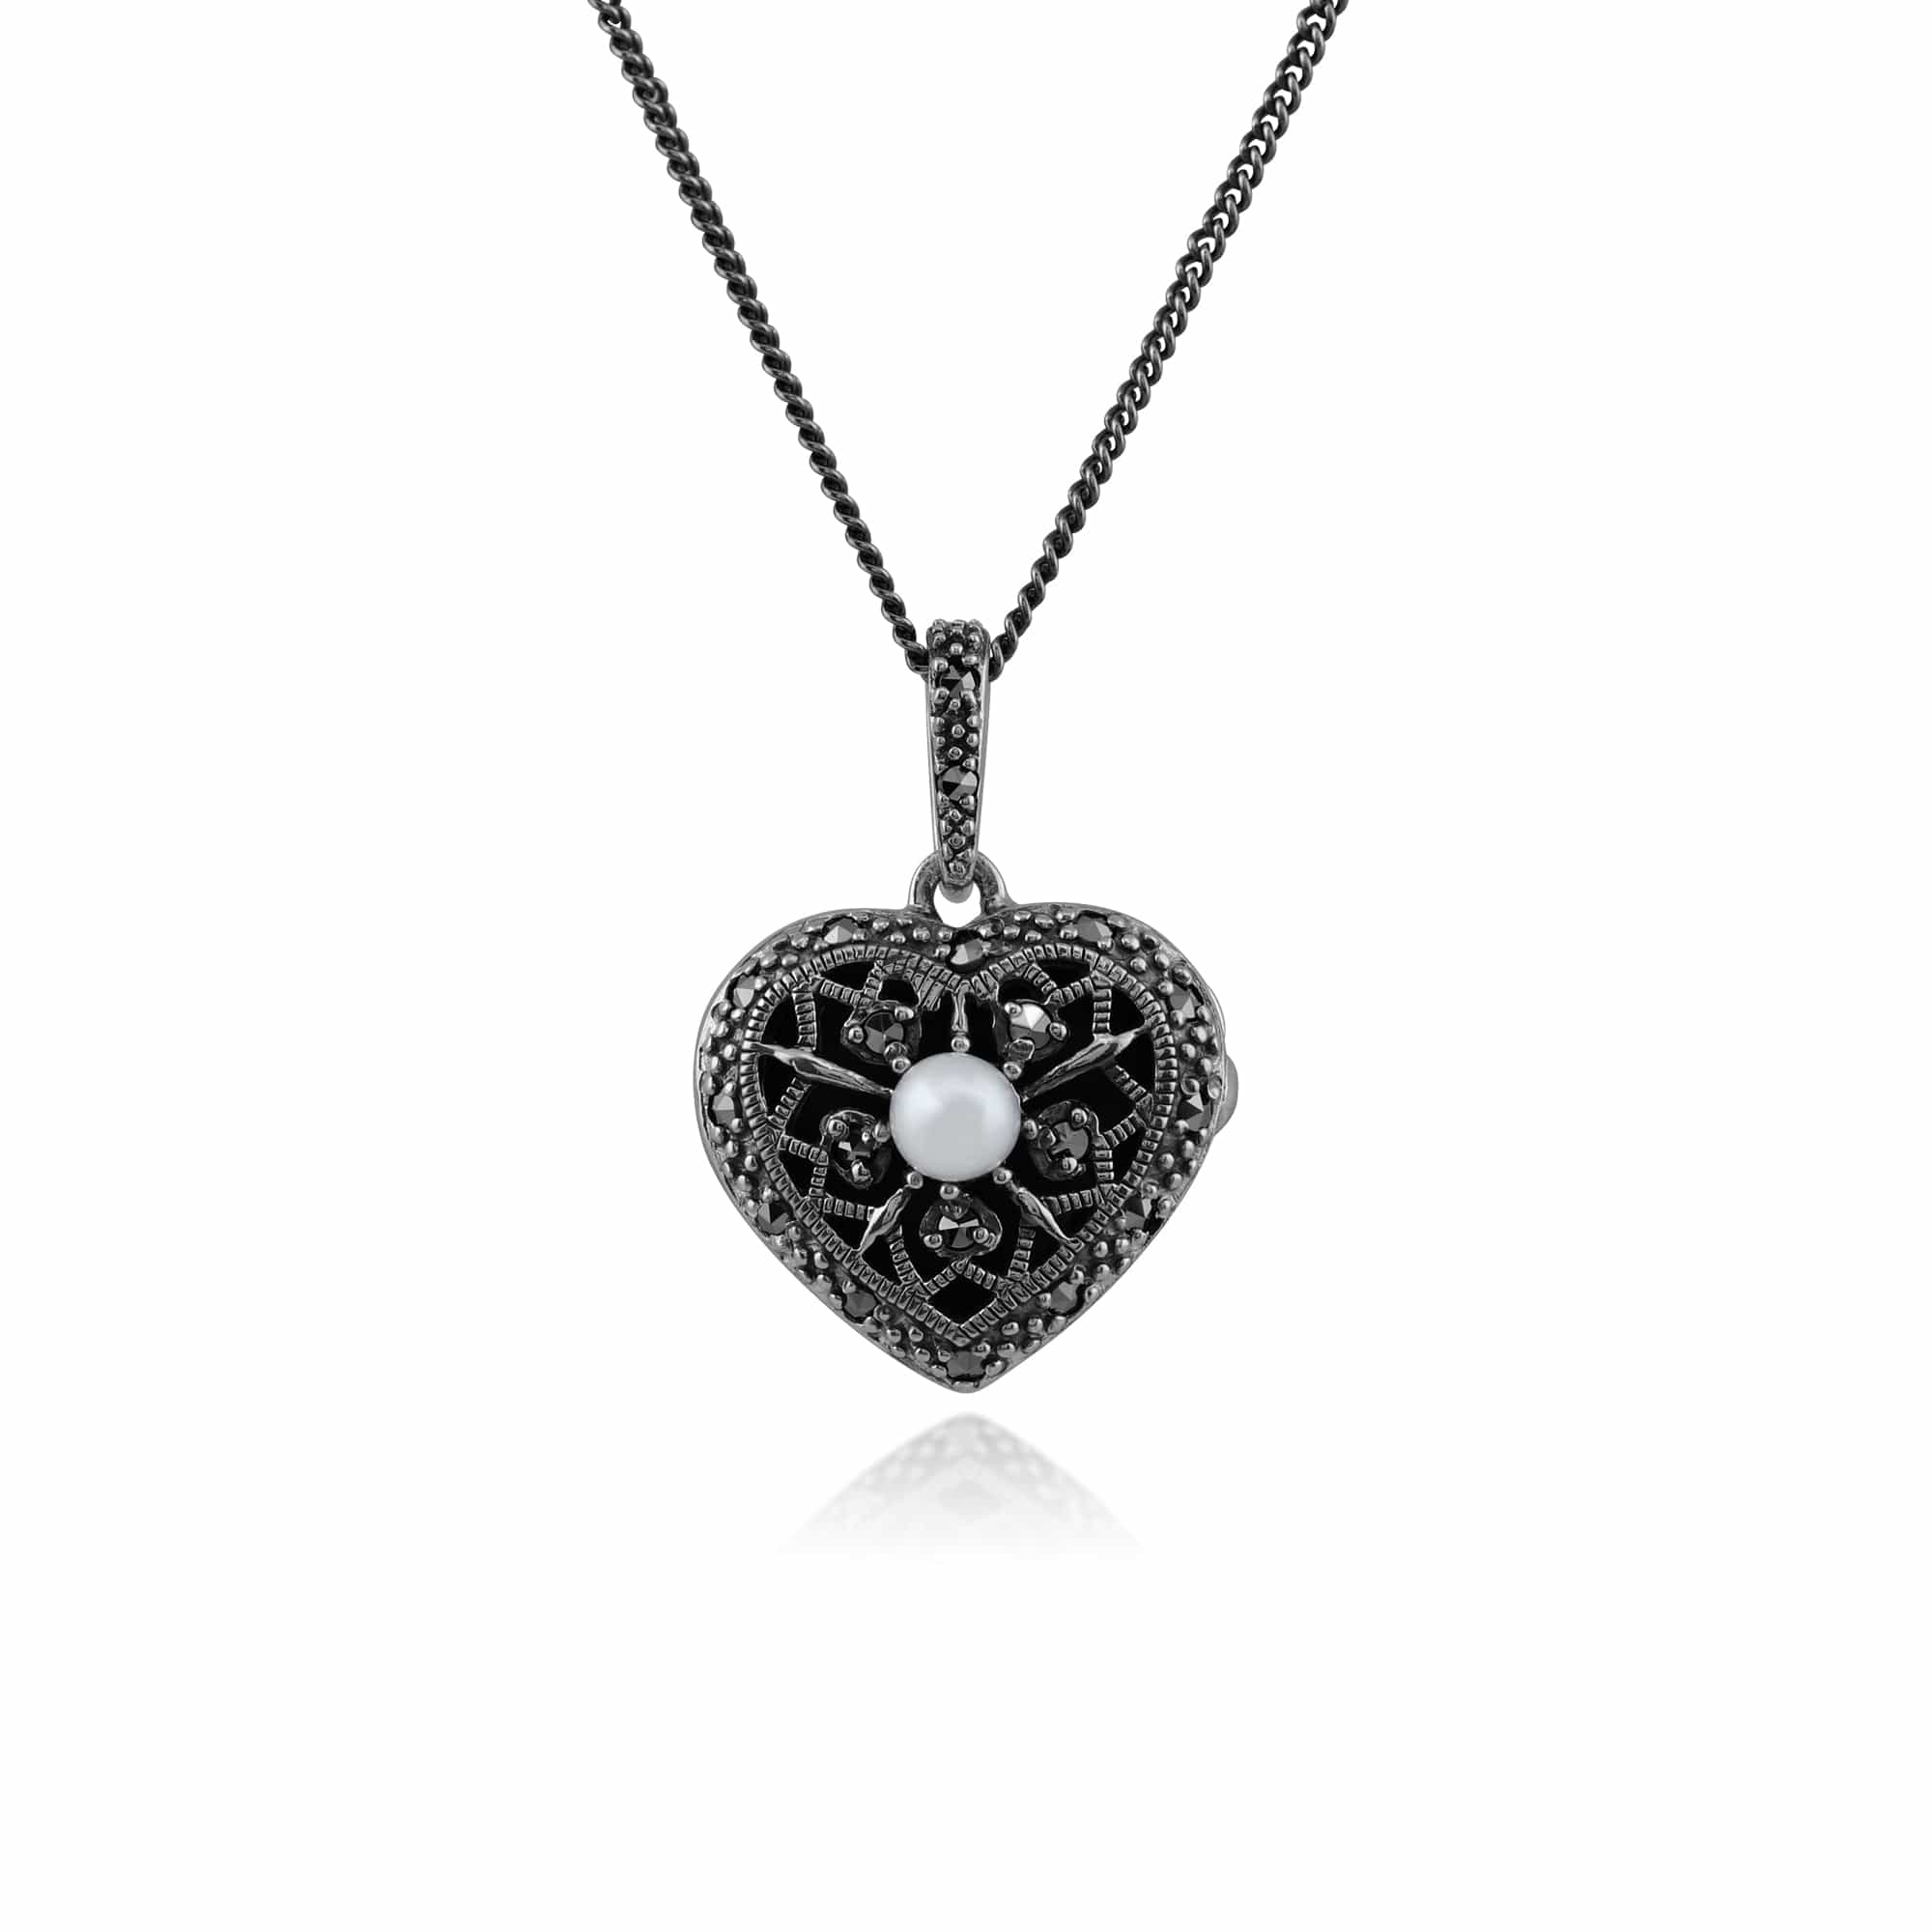 Art Nouveau Style Pearl & Marcasite Heart Necklace in 925 Sterling Silver - Gemondo